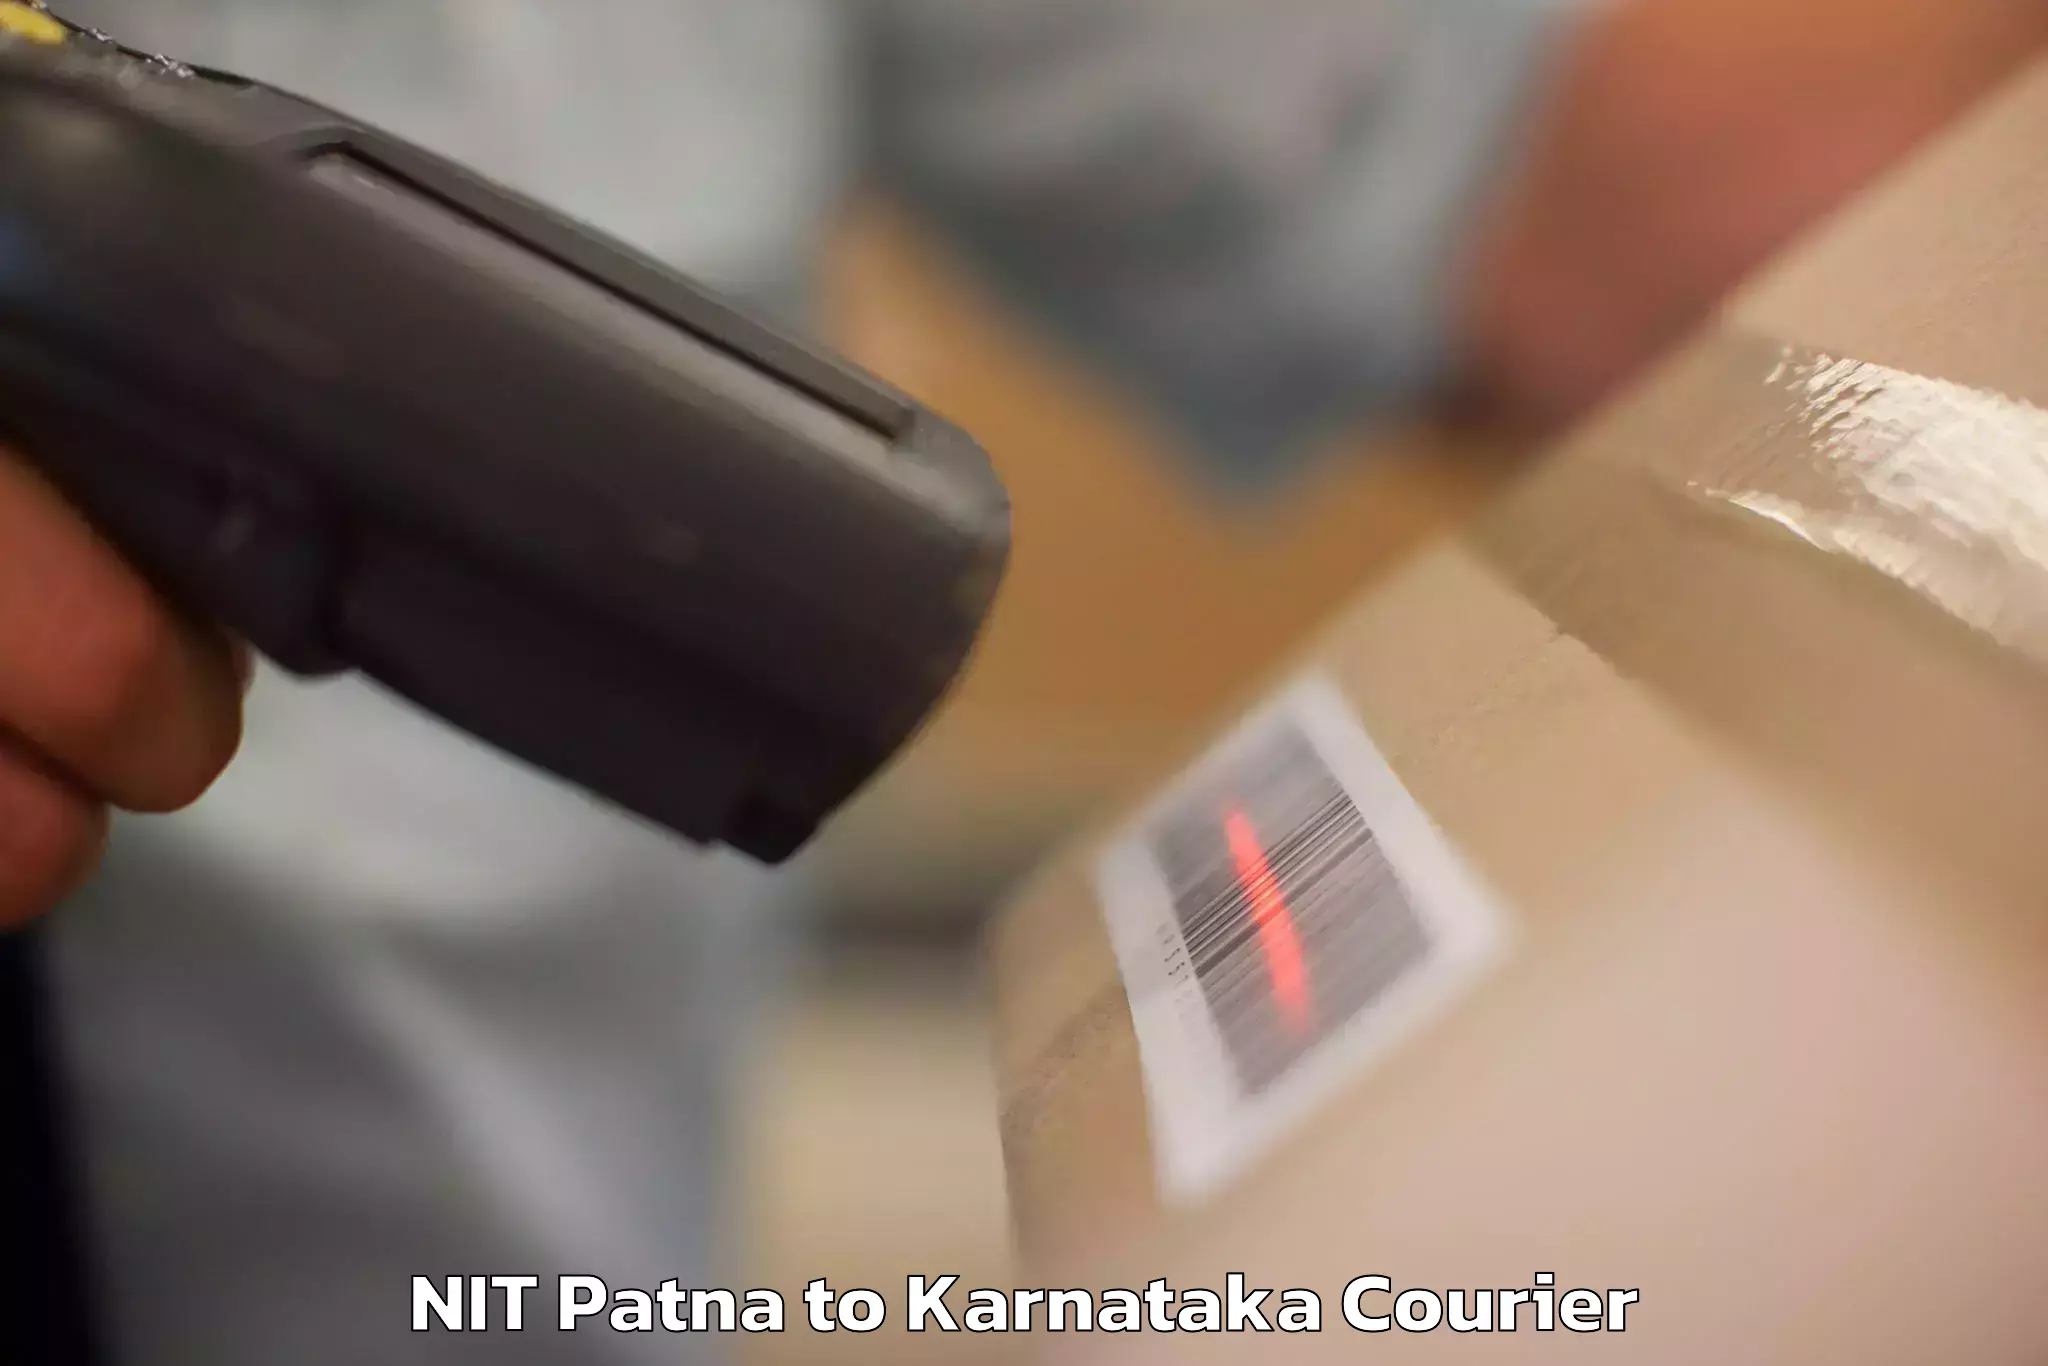 Emergency baggage service NIT Patna to Karnataka